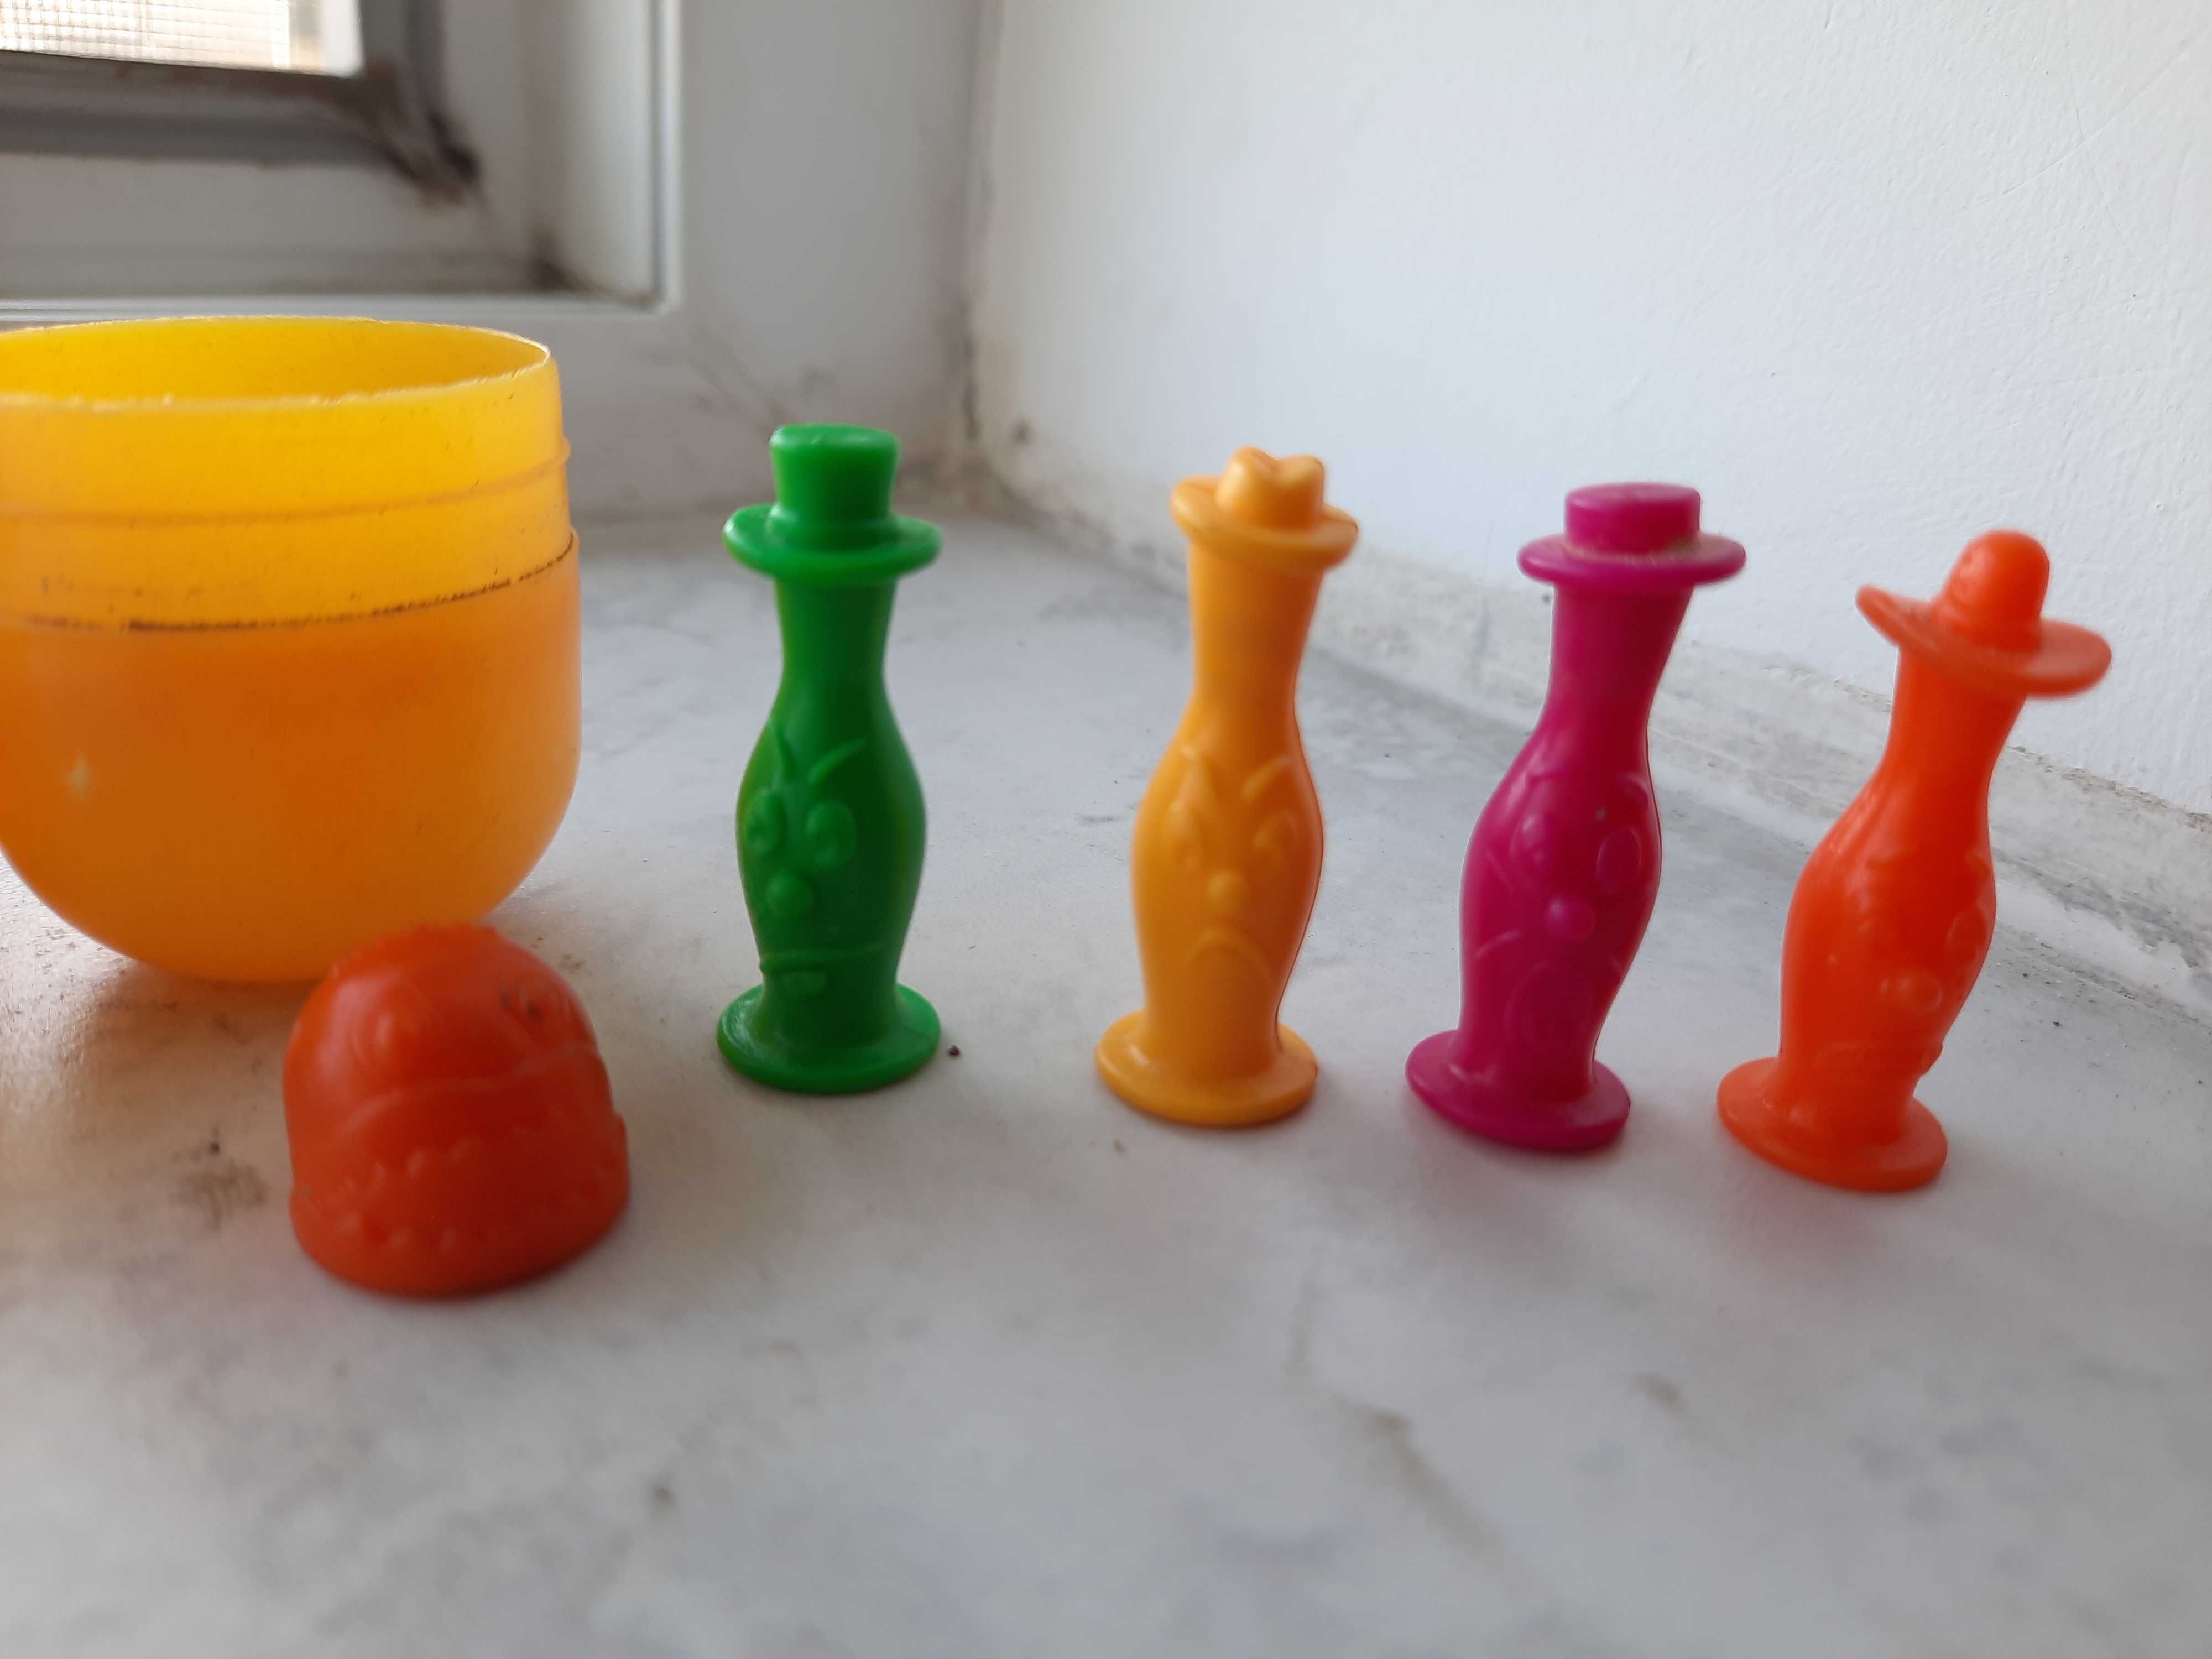 Jucarie_Jucarii_Joc copii set 4 Mini popice+bila_oua Kinder_anii 1990